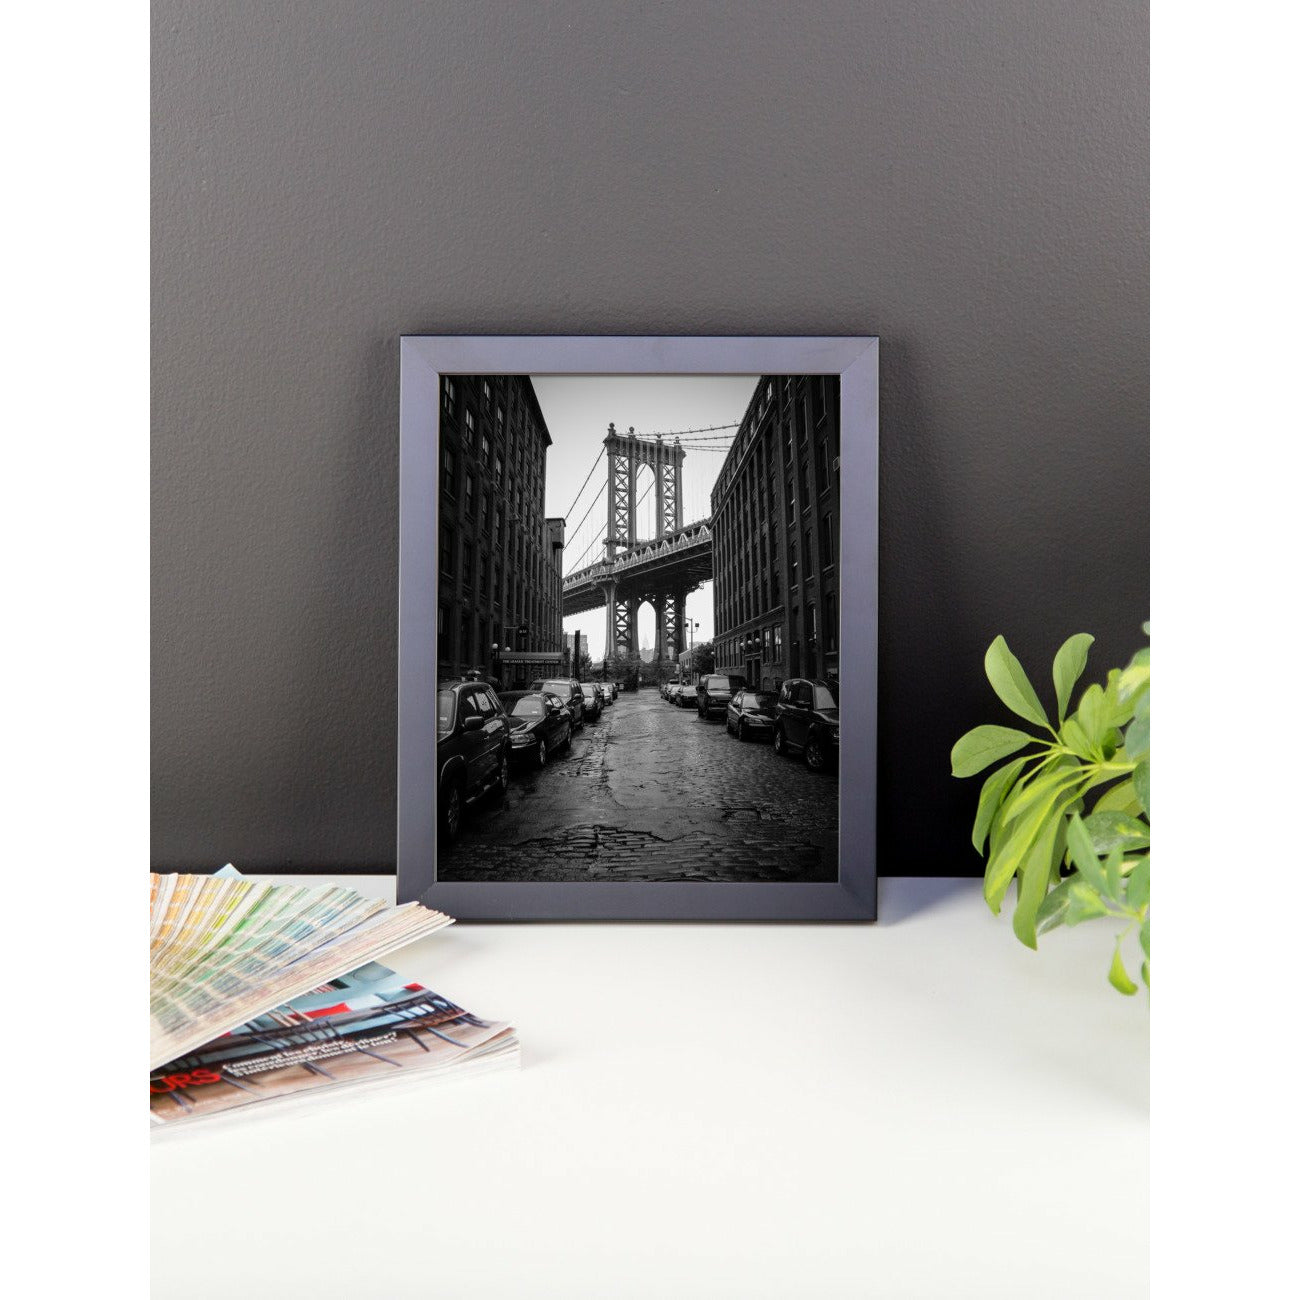 Framed Manhattan Bridge, NYC Original Photographic Print by n.corren conway - House Of Nambili